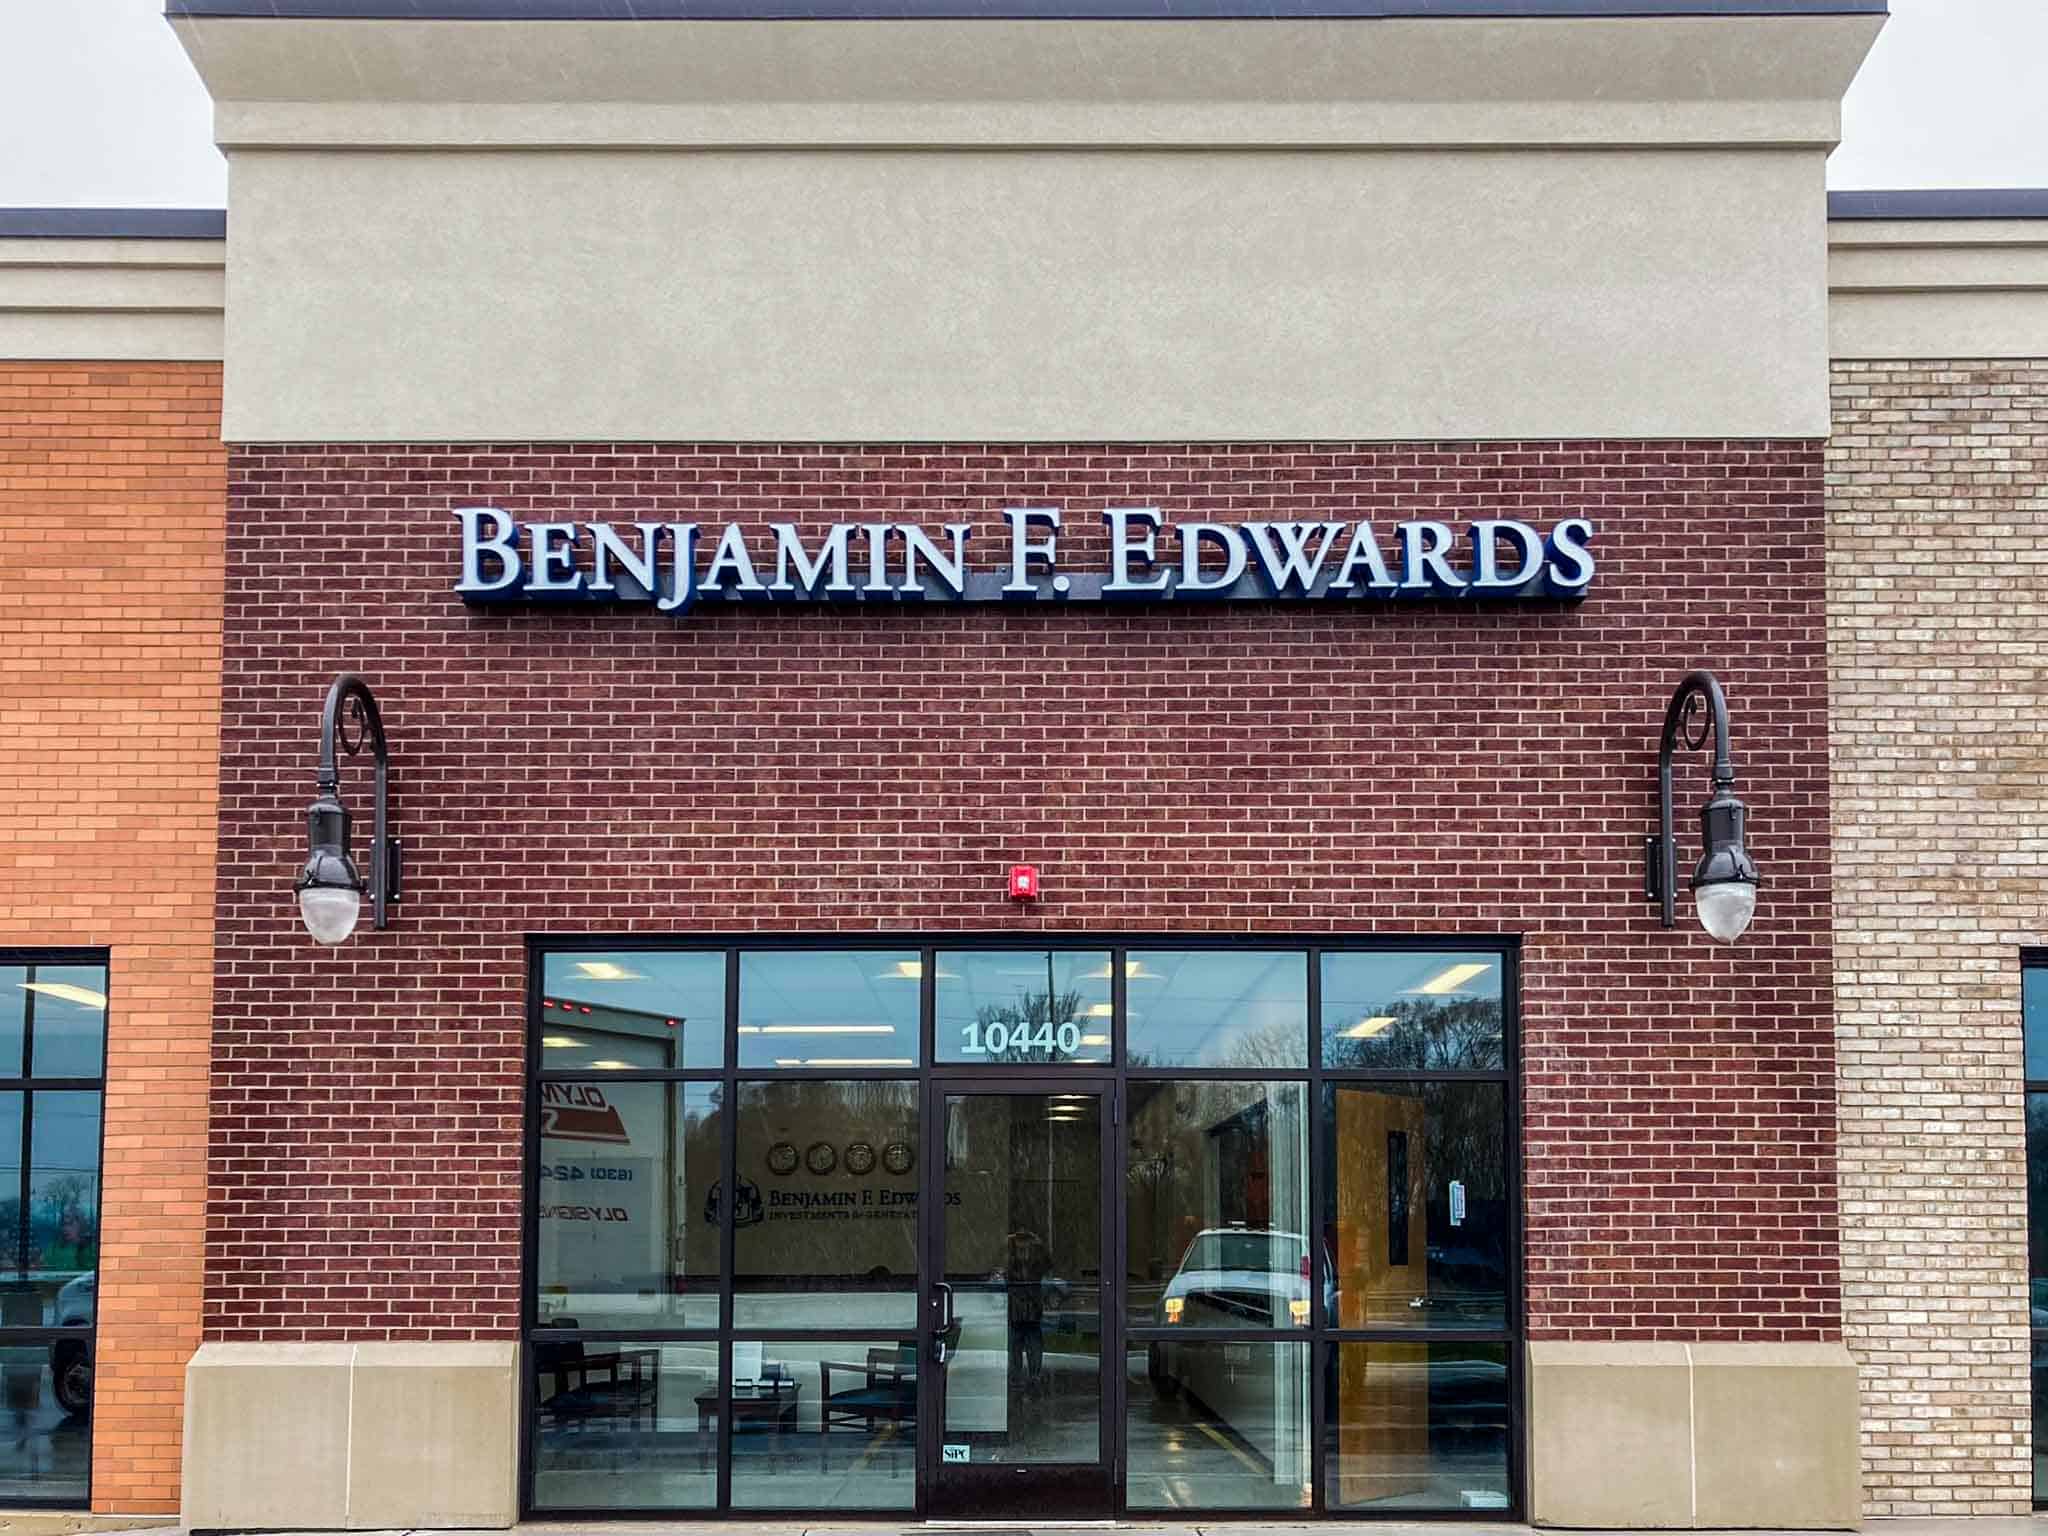 Benjamin F Edwards illuminating exterior sign outside office building